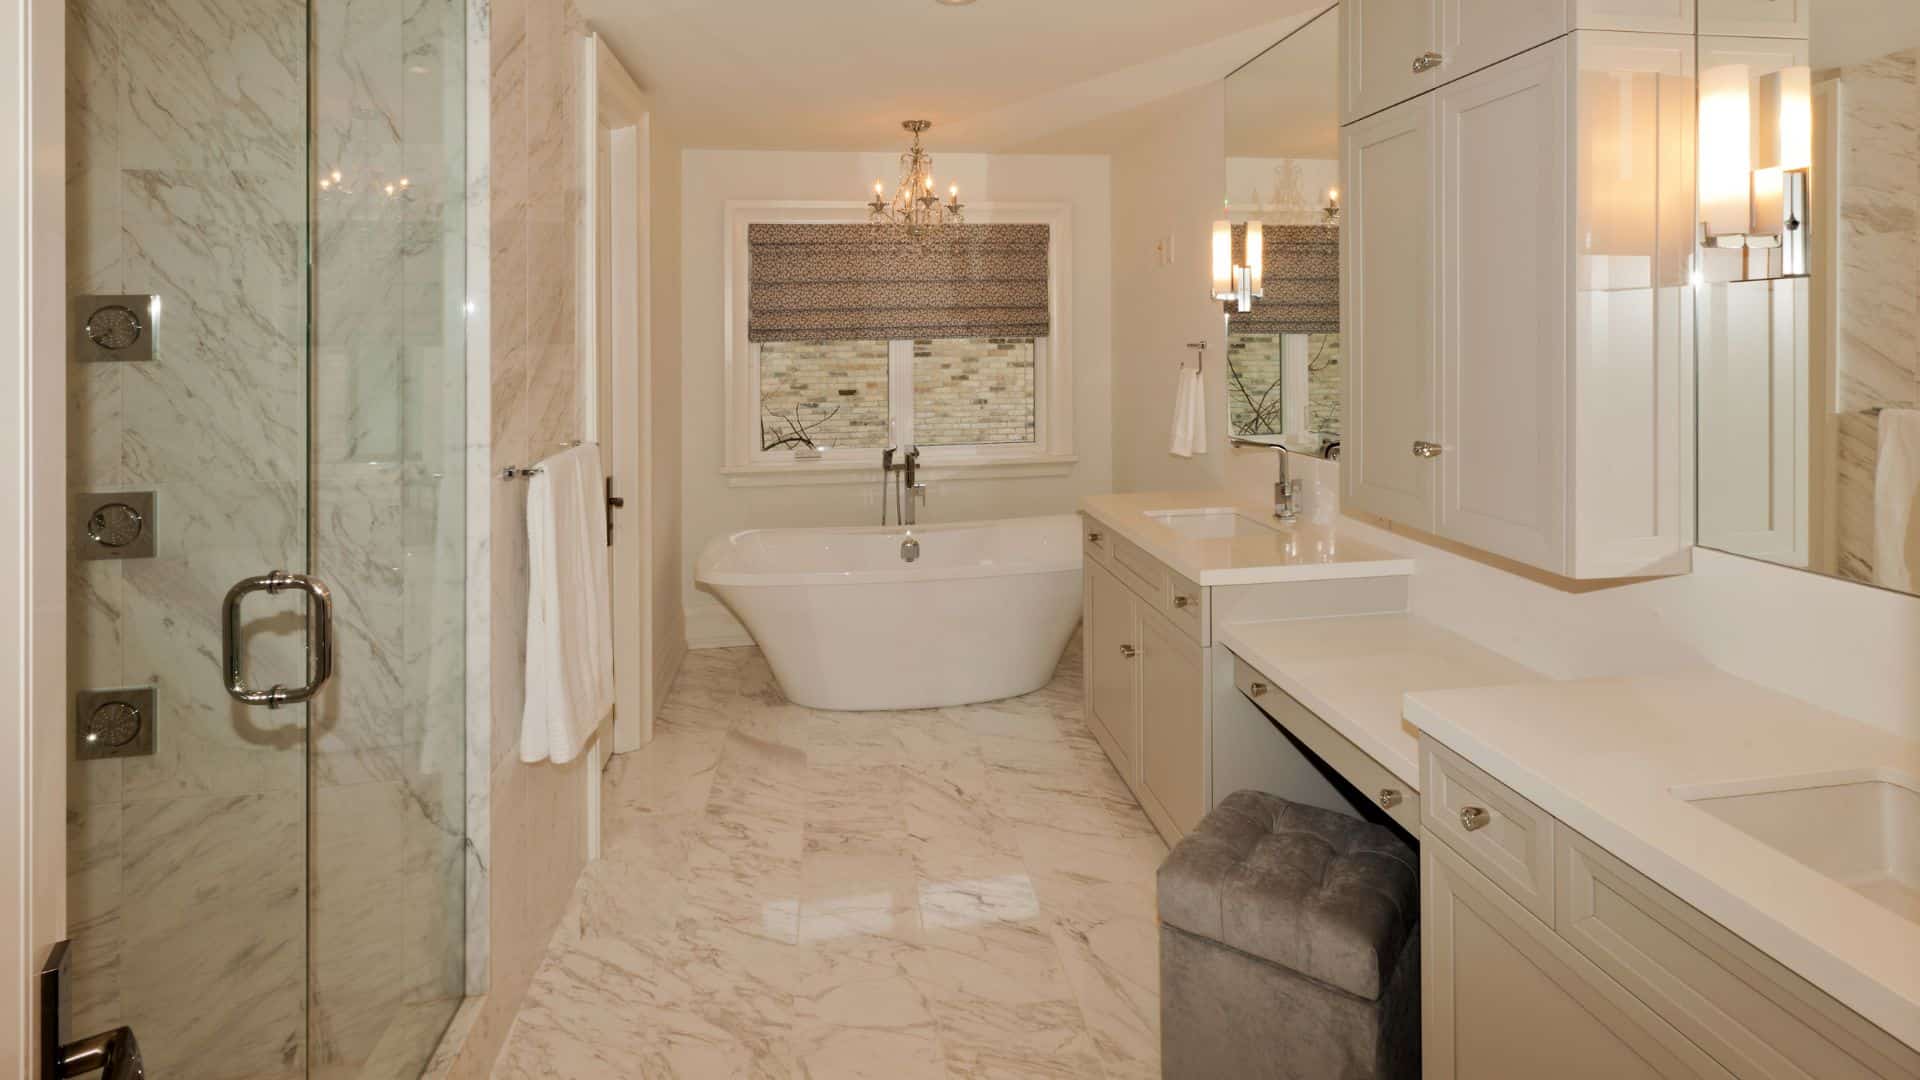 Luxury bathroom style with cream bathroom cabinets, bath tub and a shower